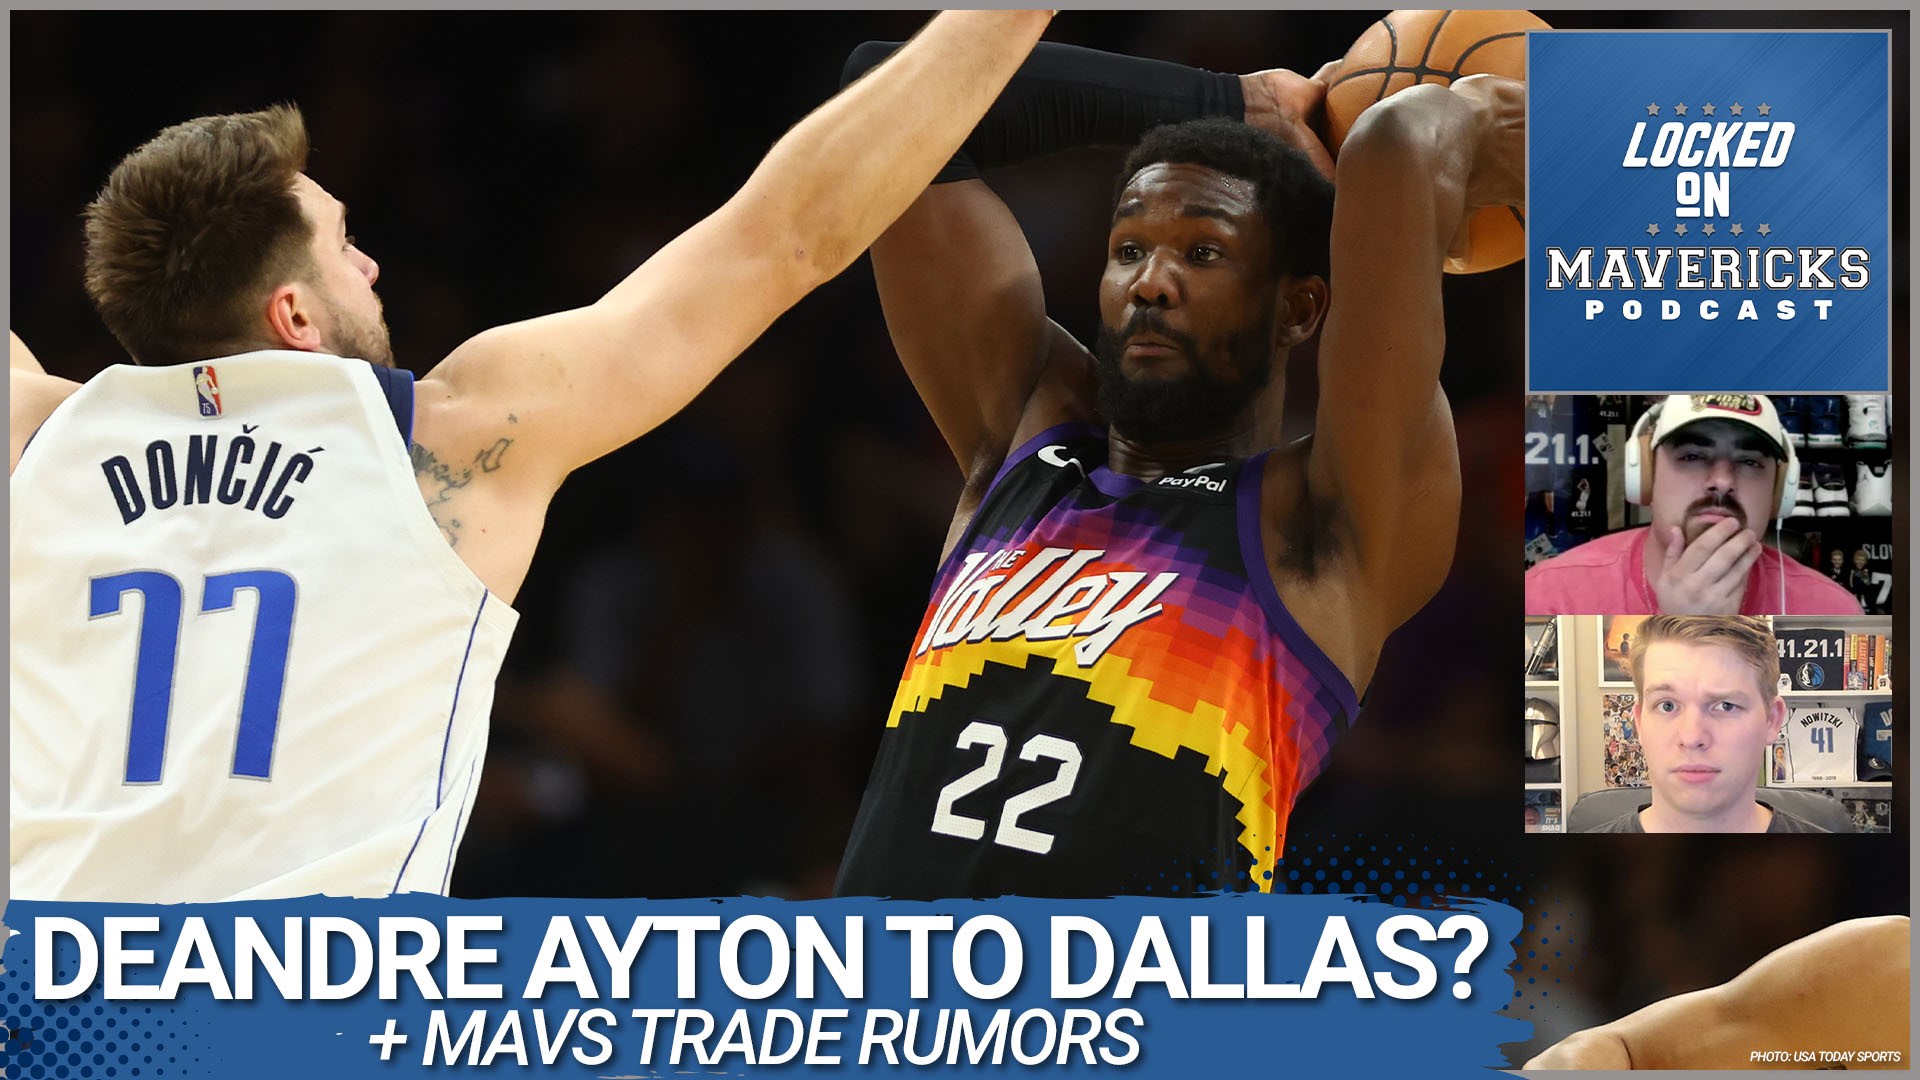 Deandre Ayton - NBA News, Rumors, & Updates